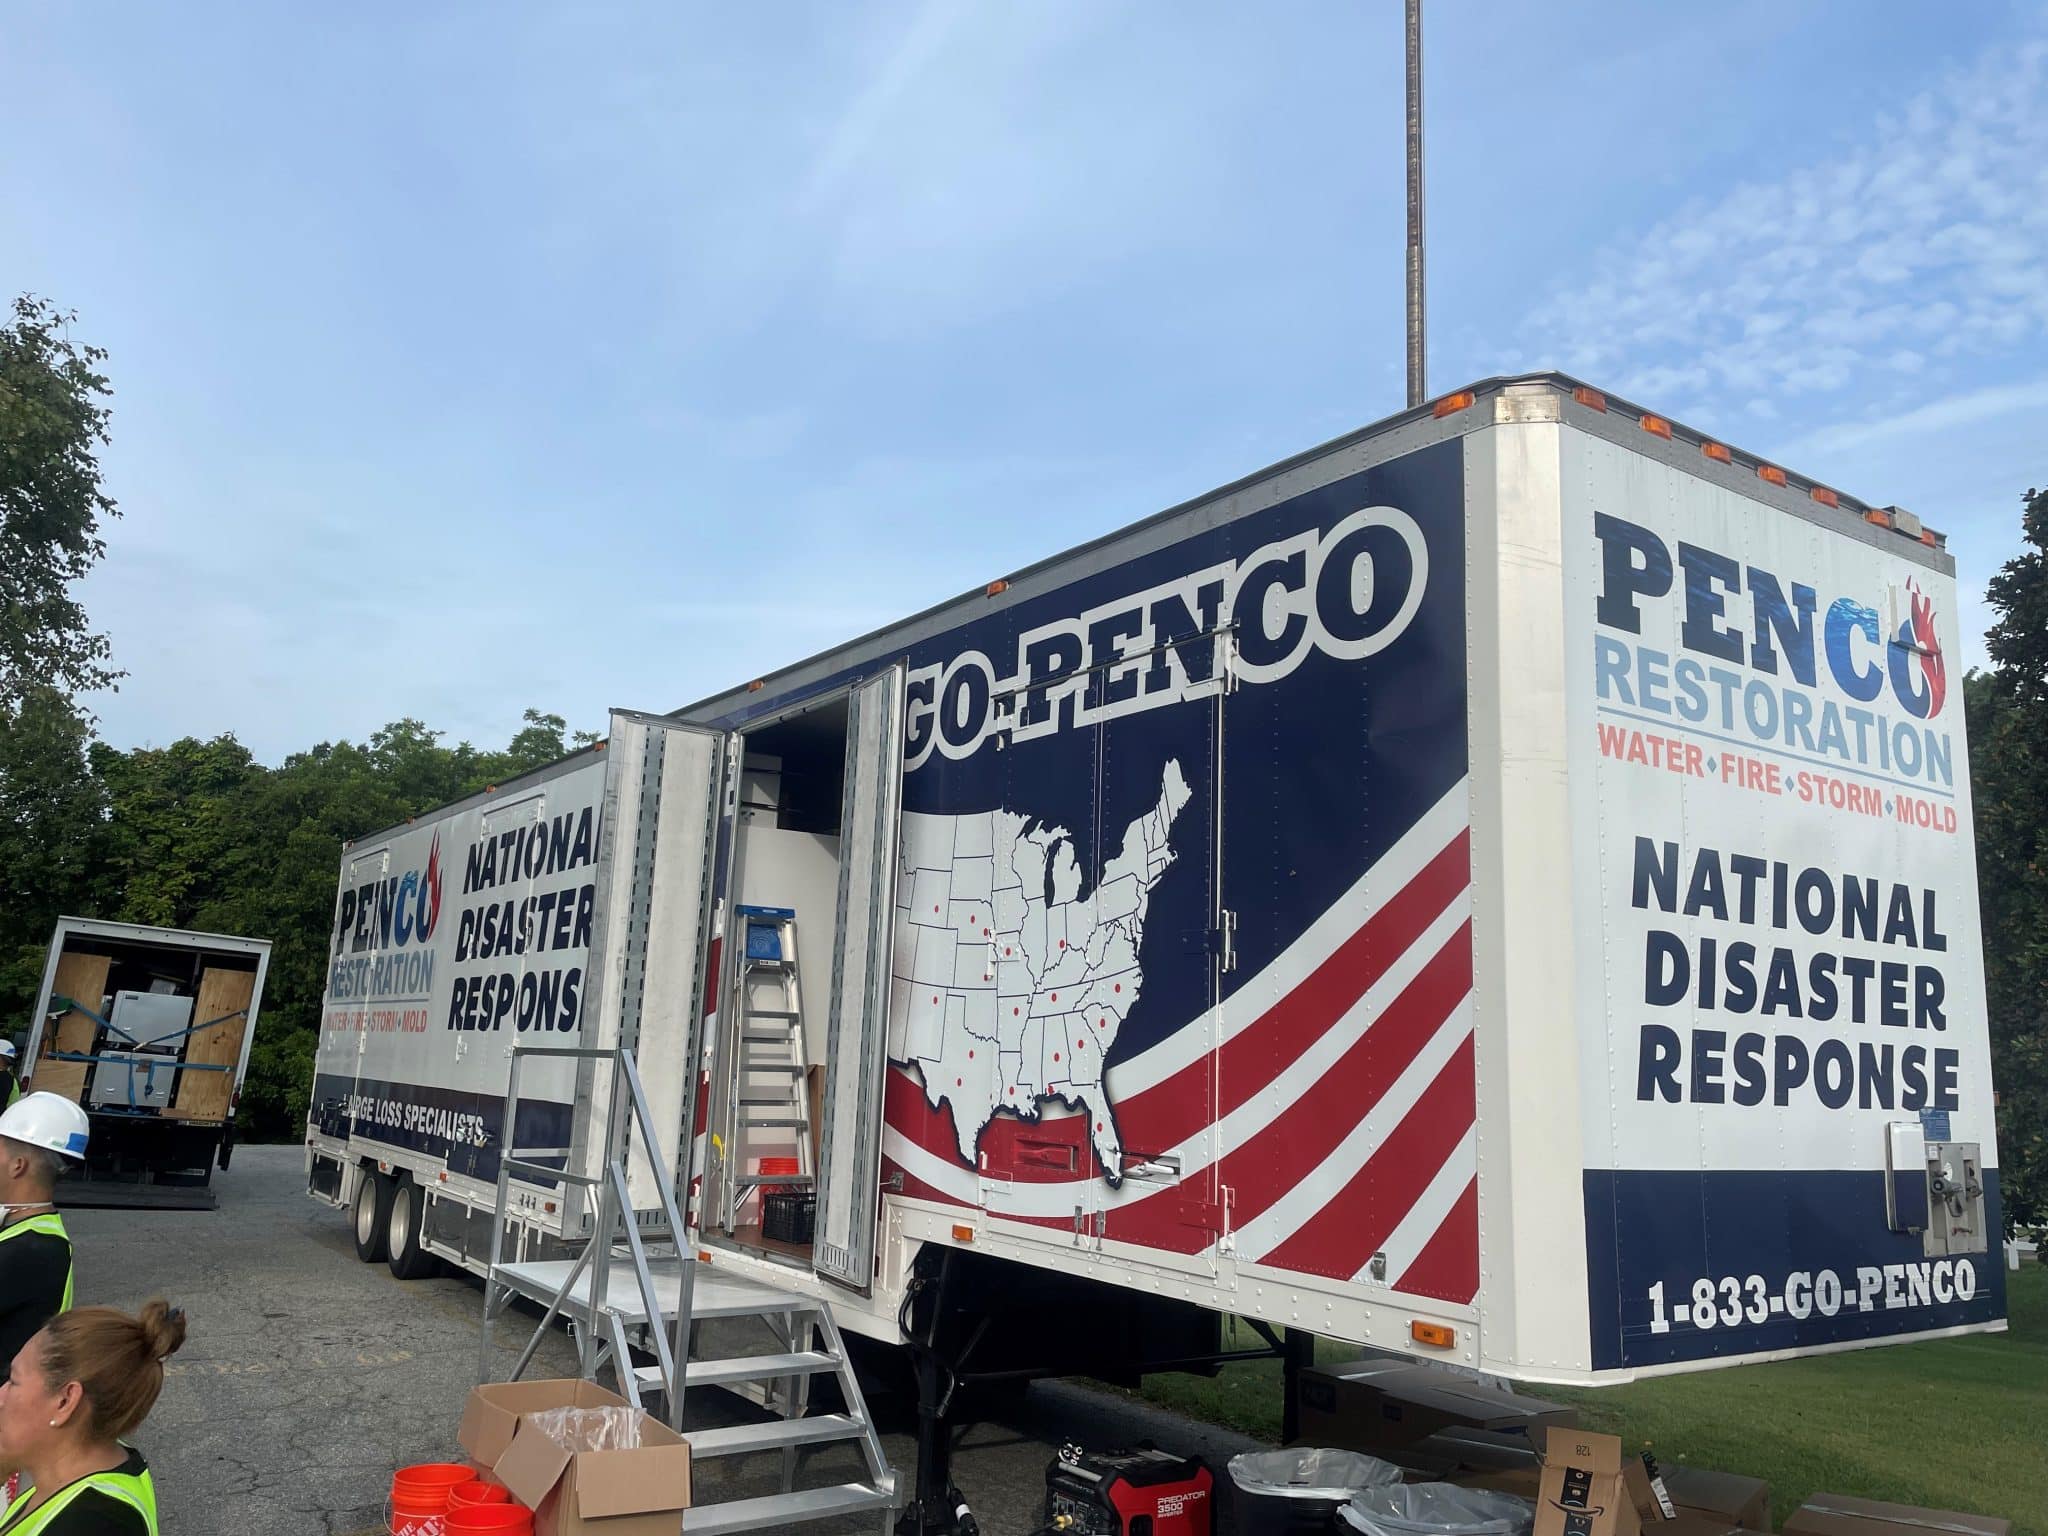 Penco's truck